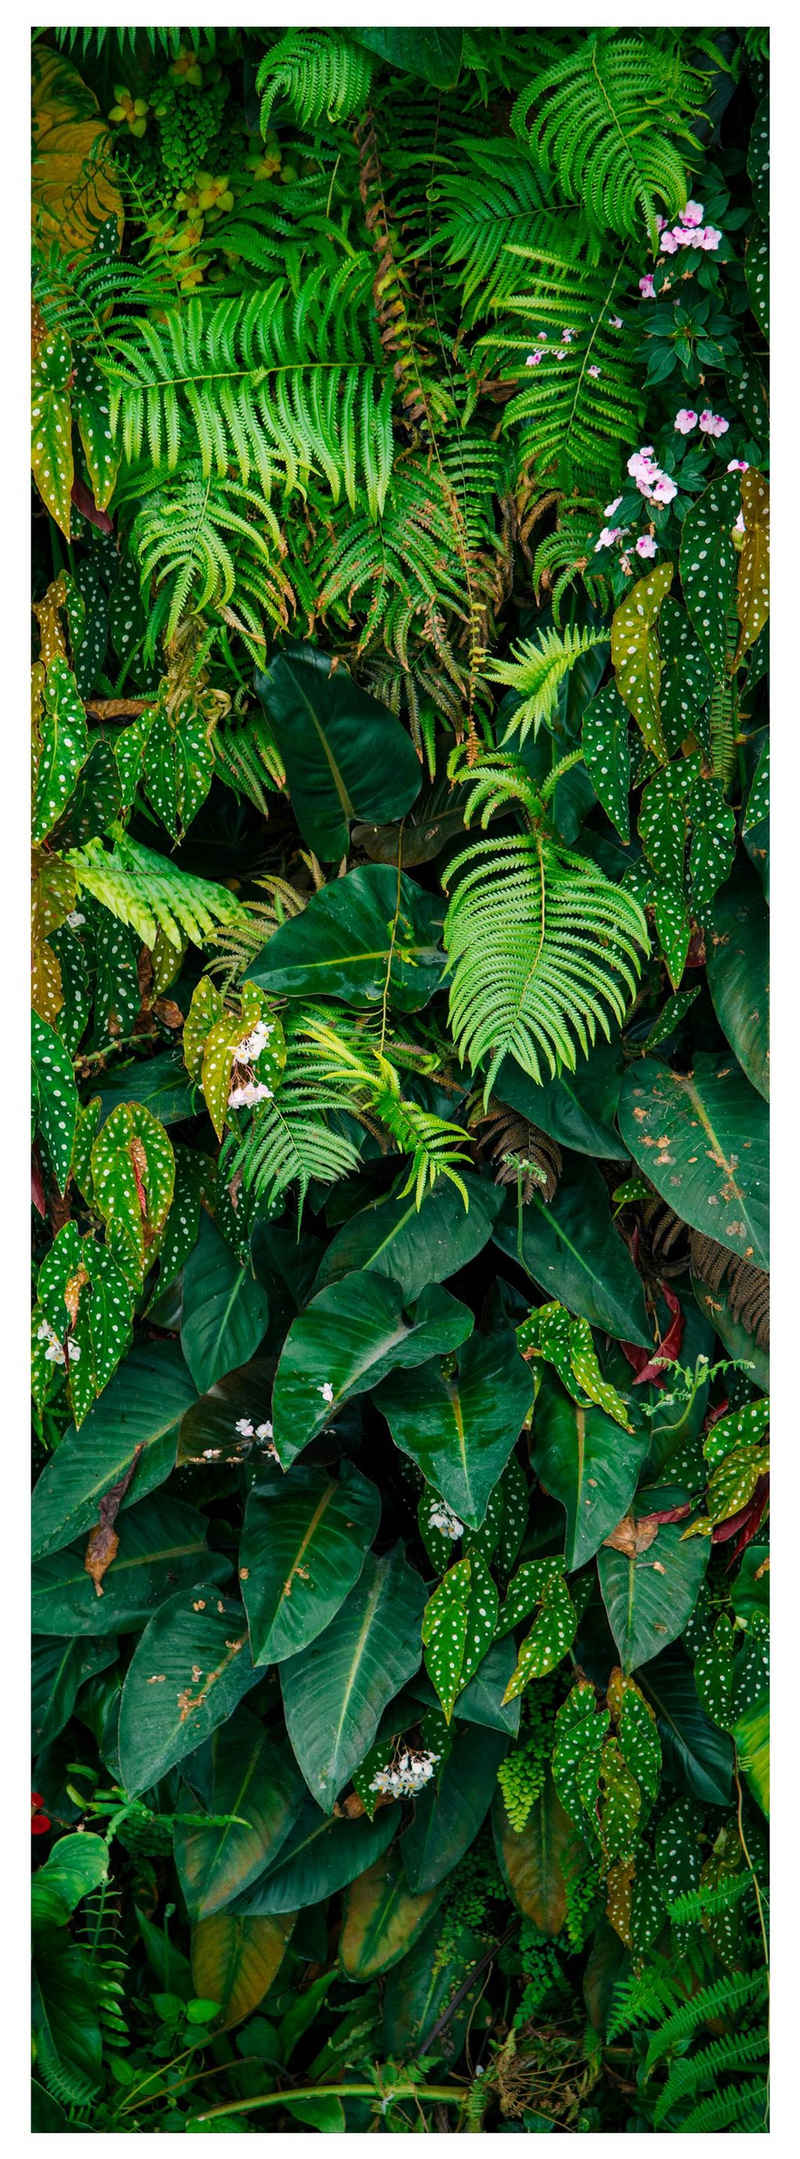 wandmotiv24 Türtapete Wand aus Blättern, Urwald, Natur, Grün, glatt, Fototapete, Wandtapete, Motivtapete, matt, selbstklebende Dekorfolie